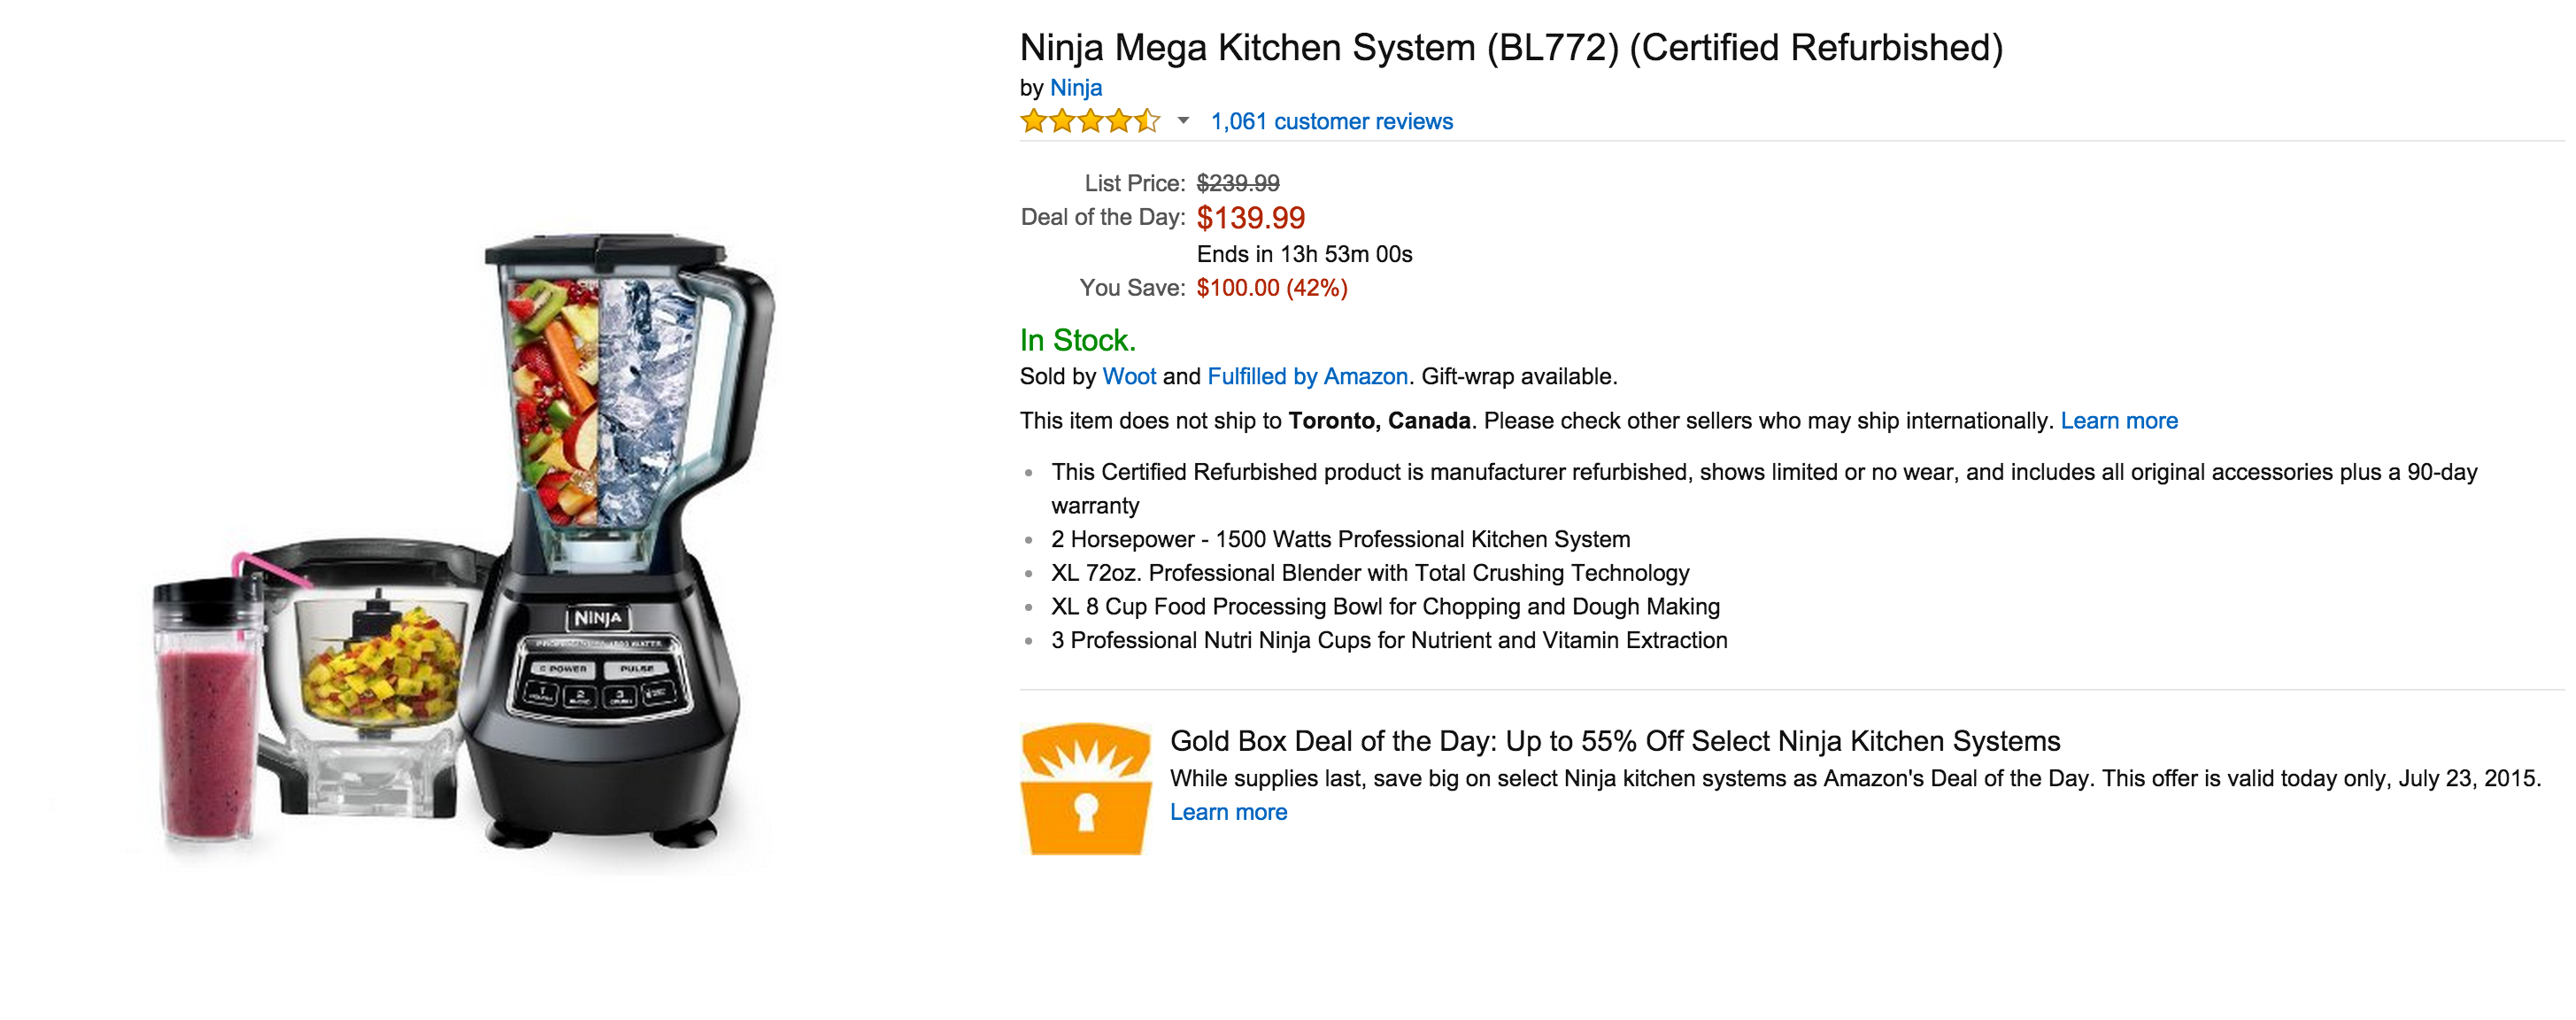 Ninja Pro 1500 watt with mega kitchen system box